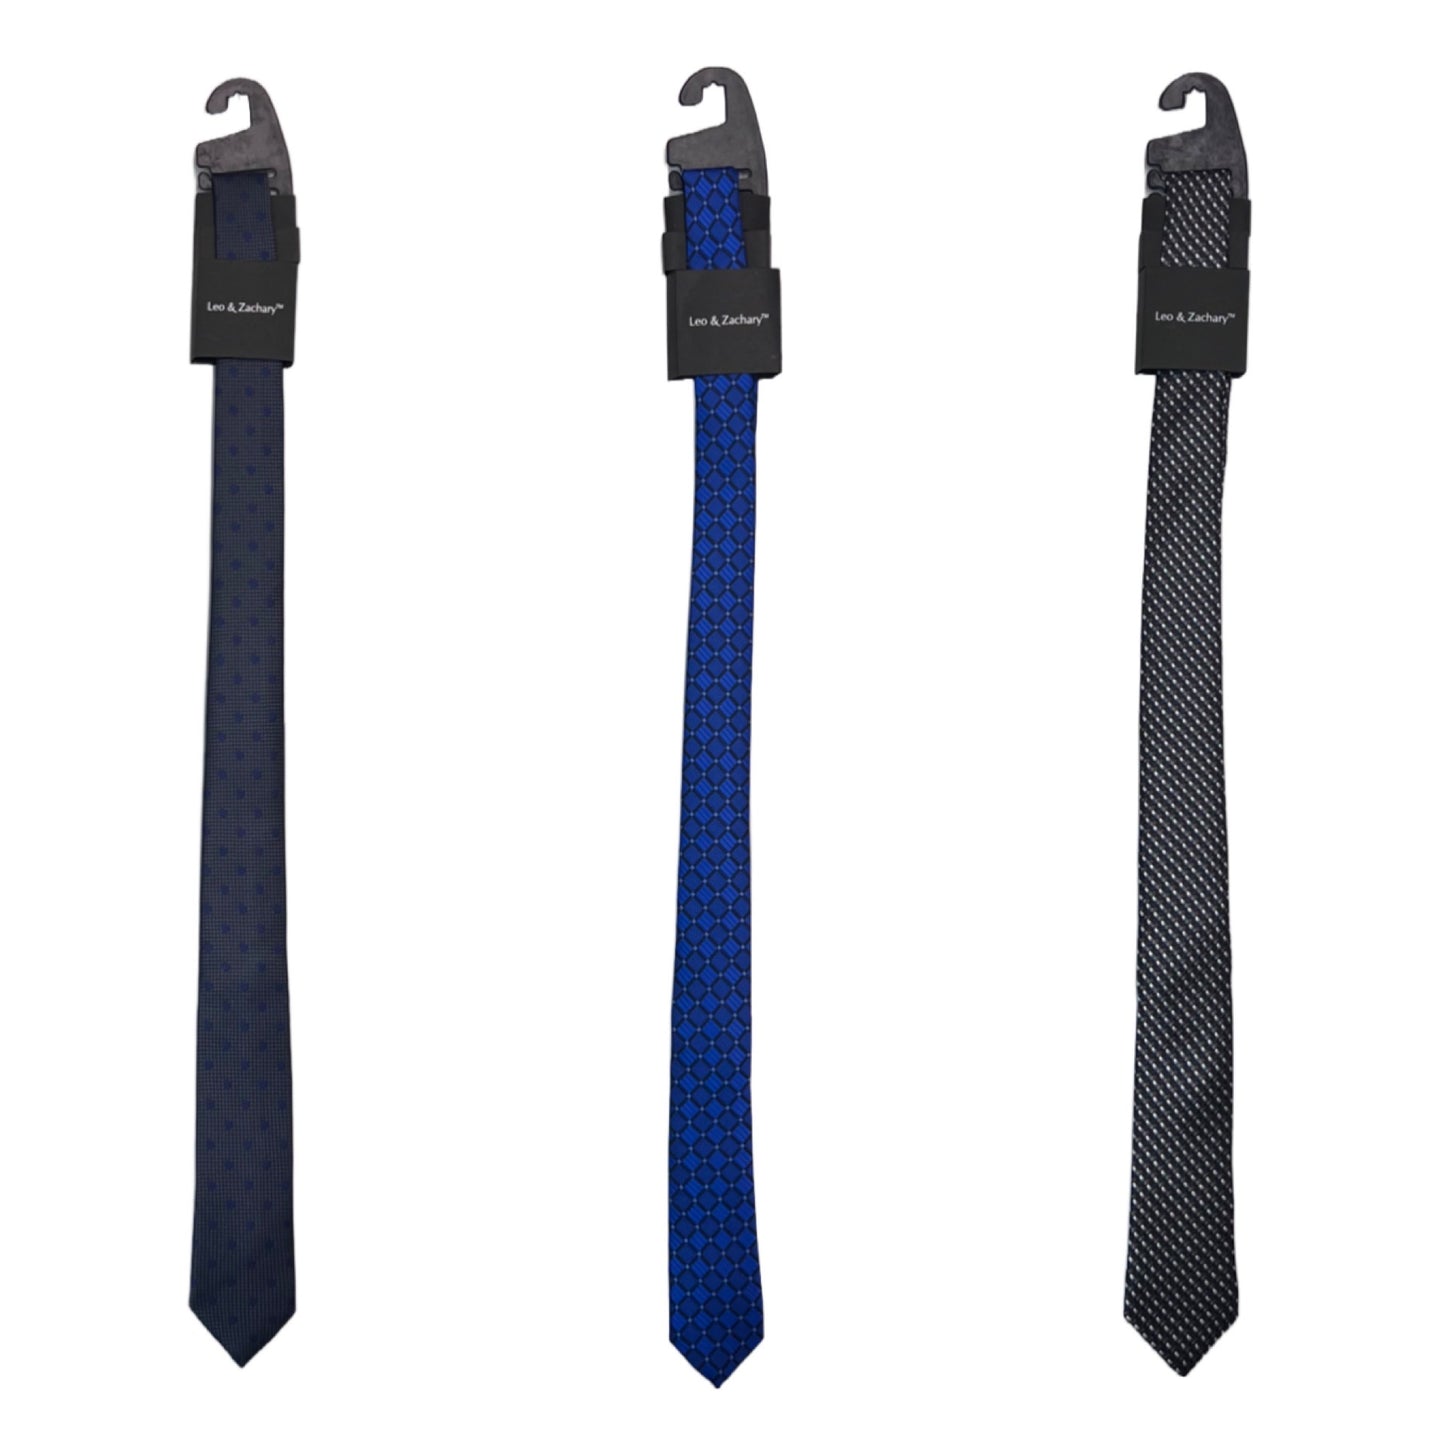 Leo & Zachary Pattern Neckties